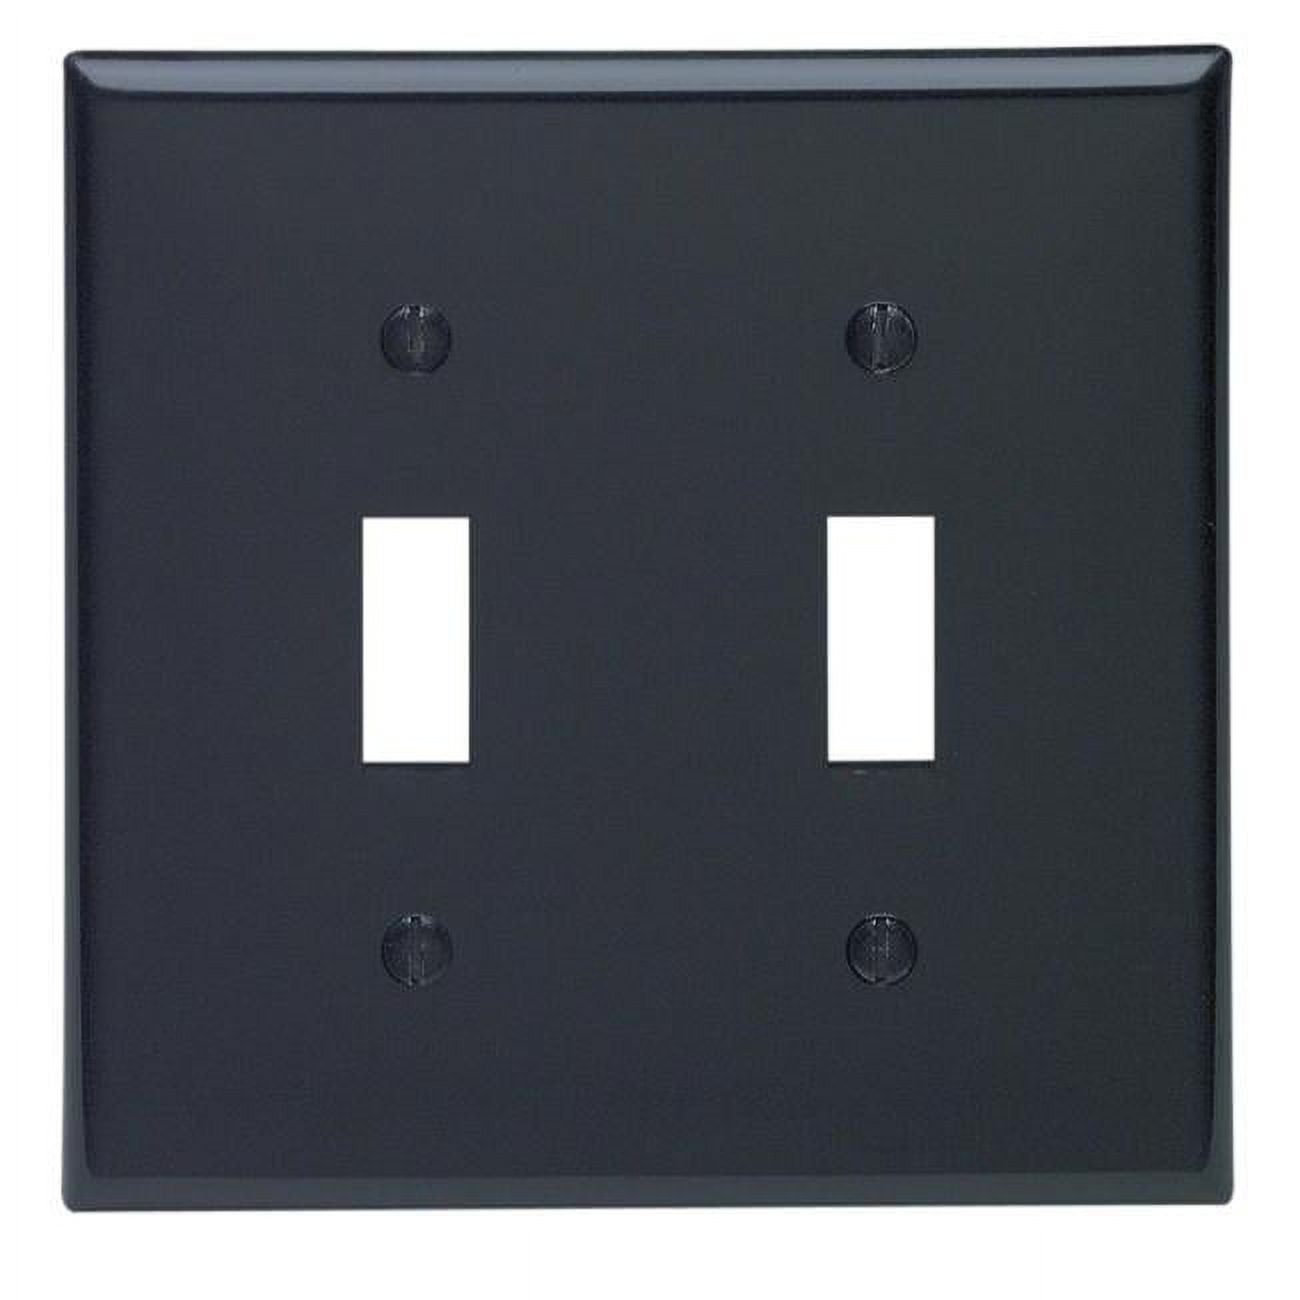 80709-00e 2-gang Standard Toggle Switch Wall Plate Black